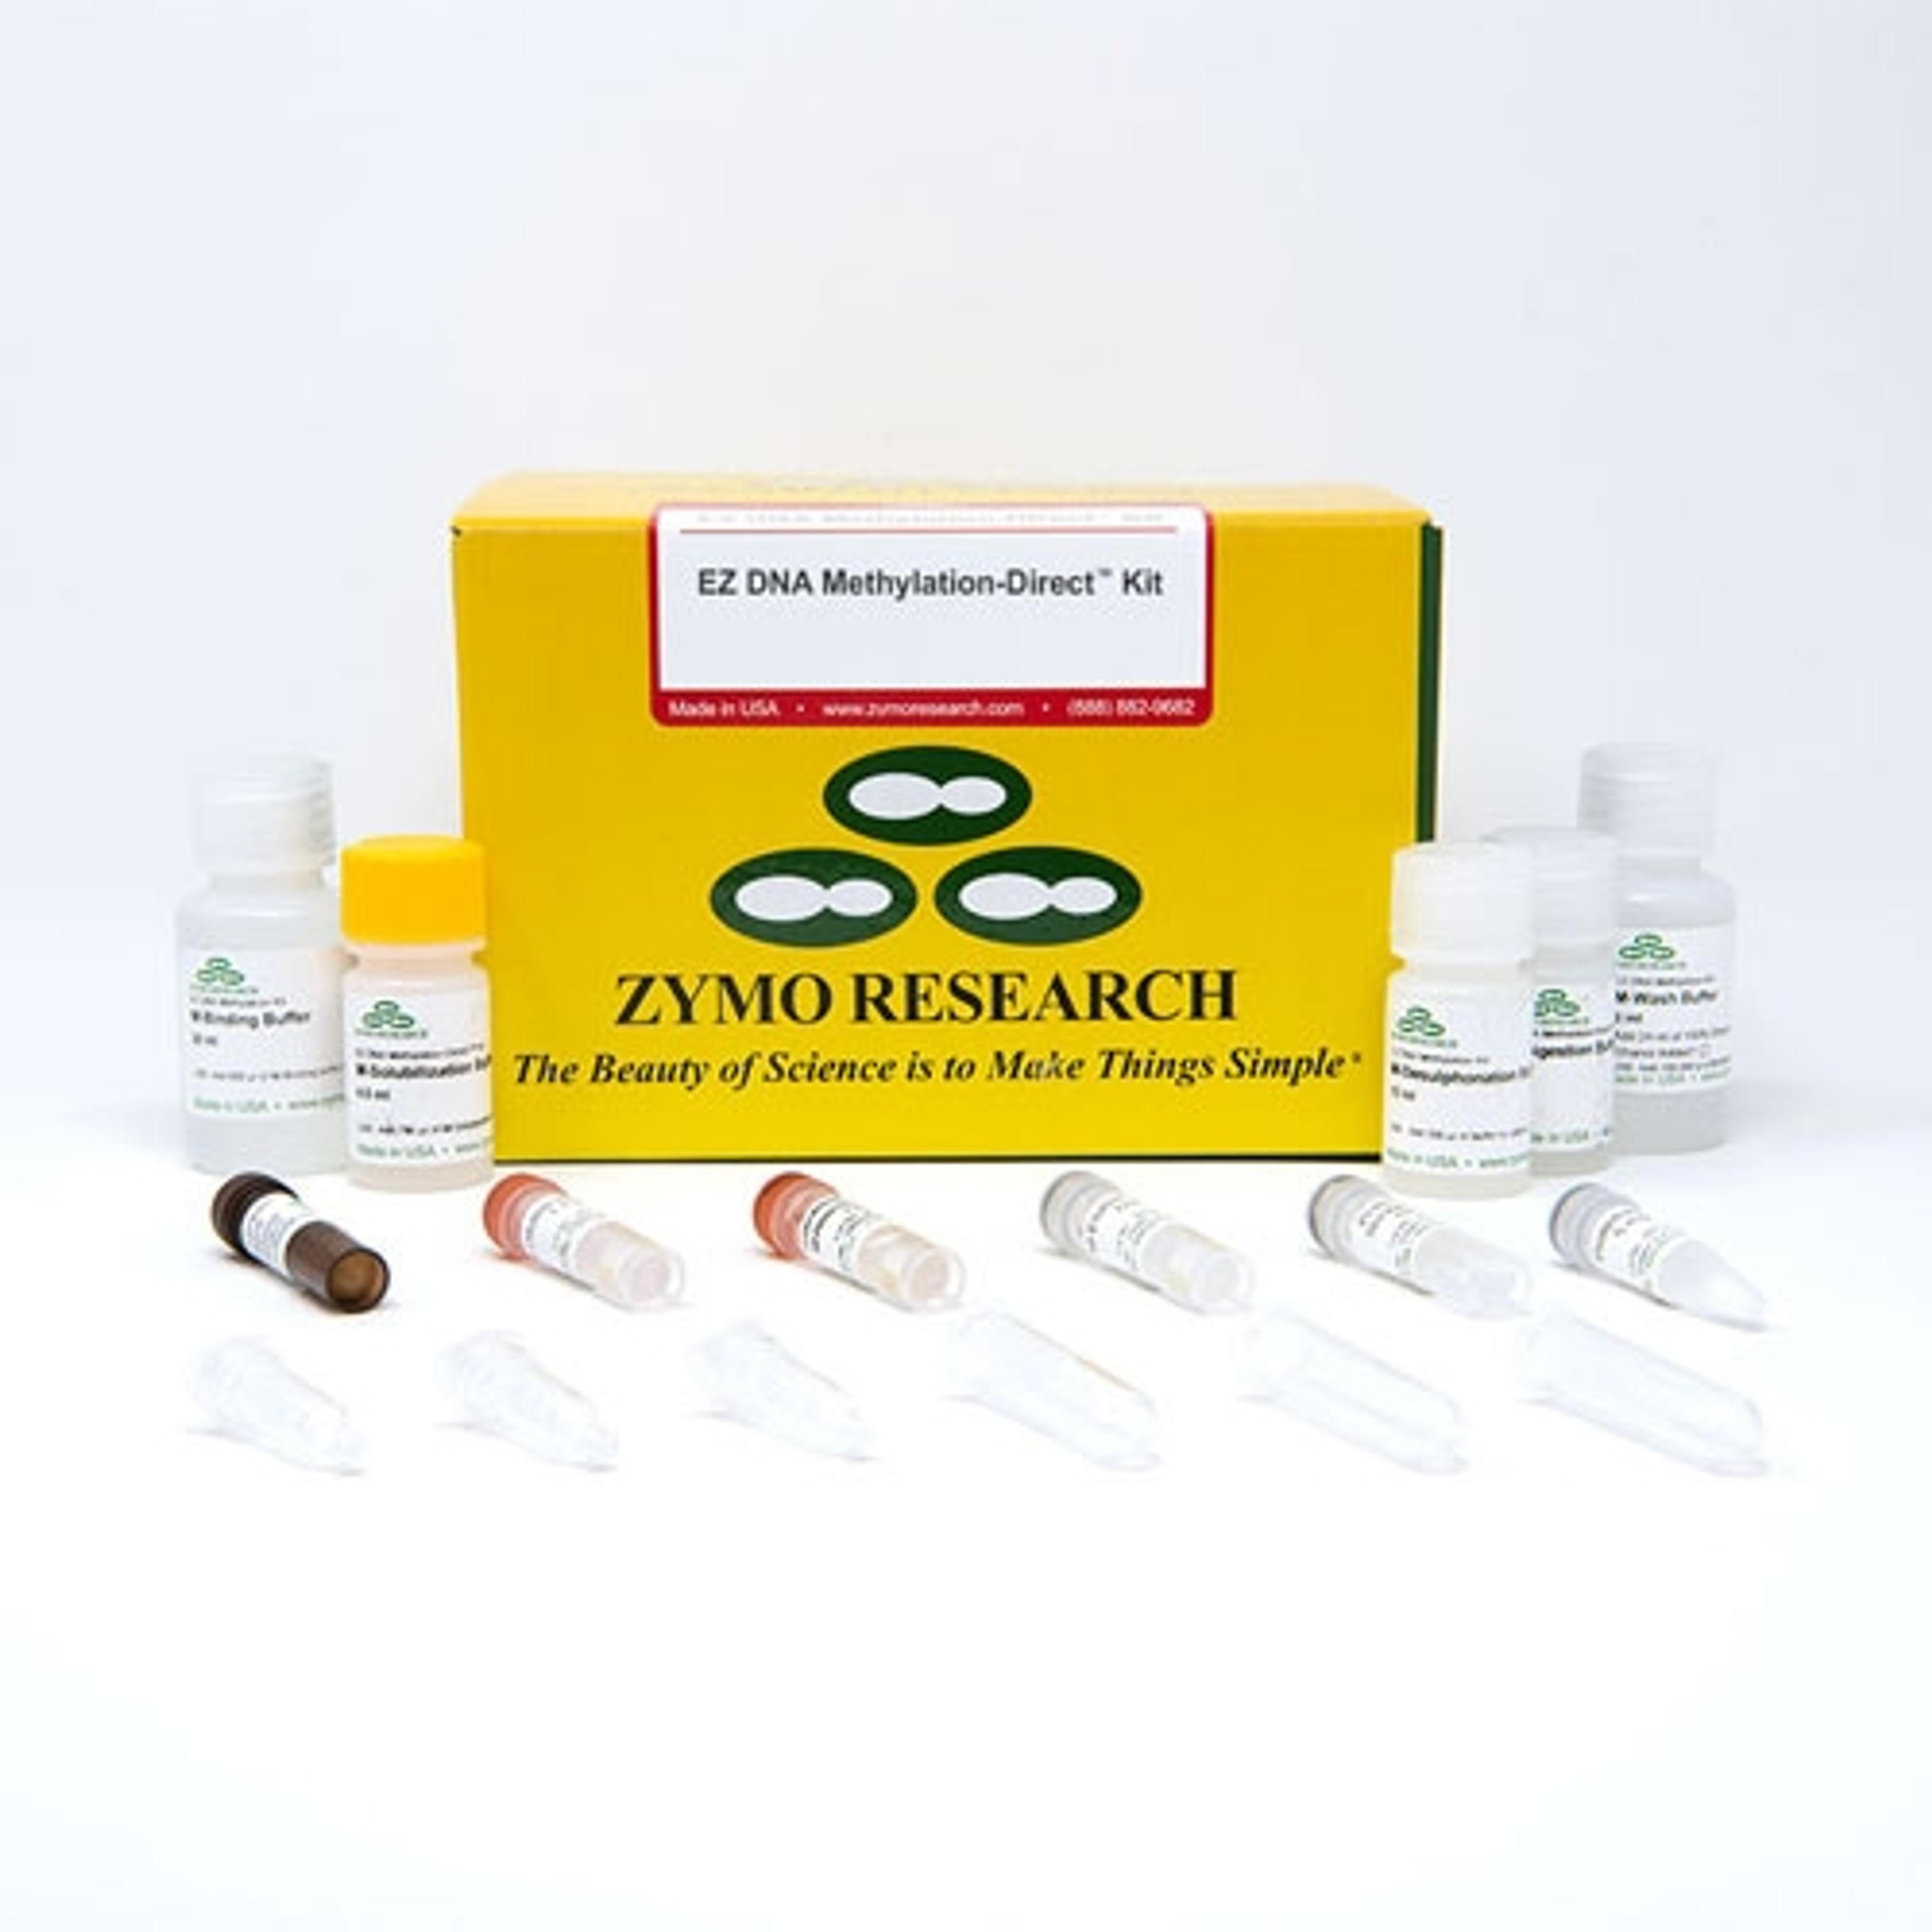 EZ DNA Methylation-Direct Bisulfite Conversion Kit